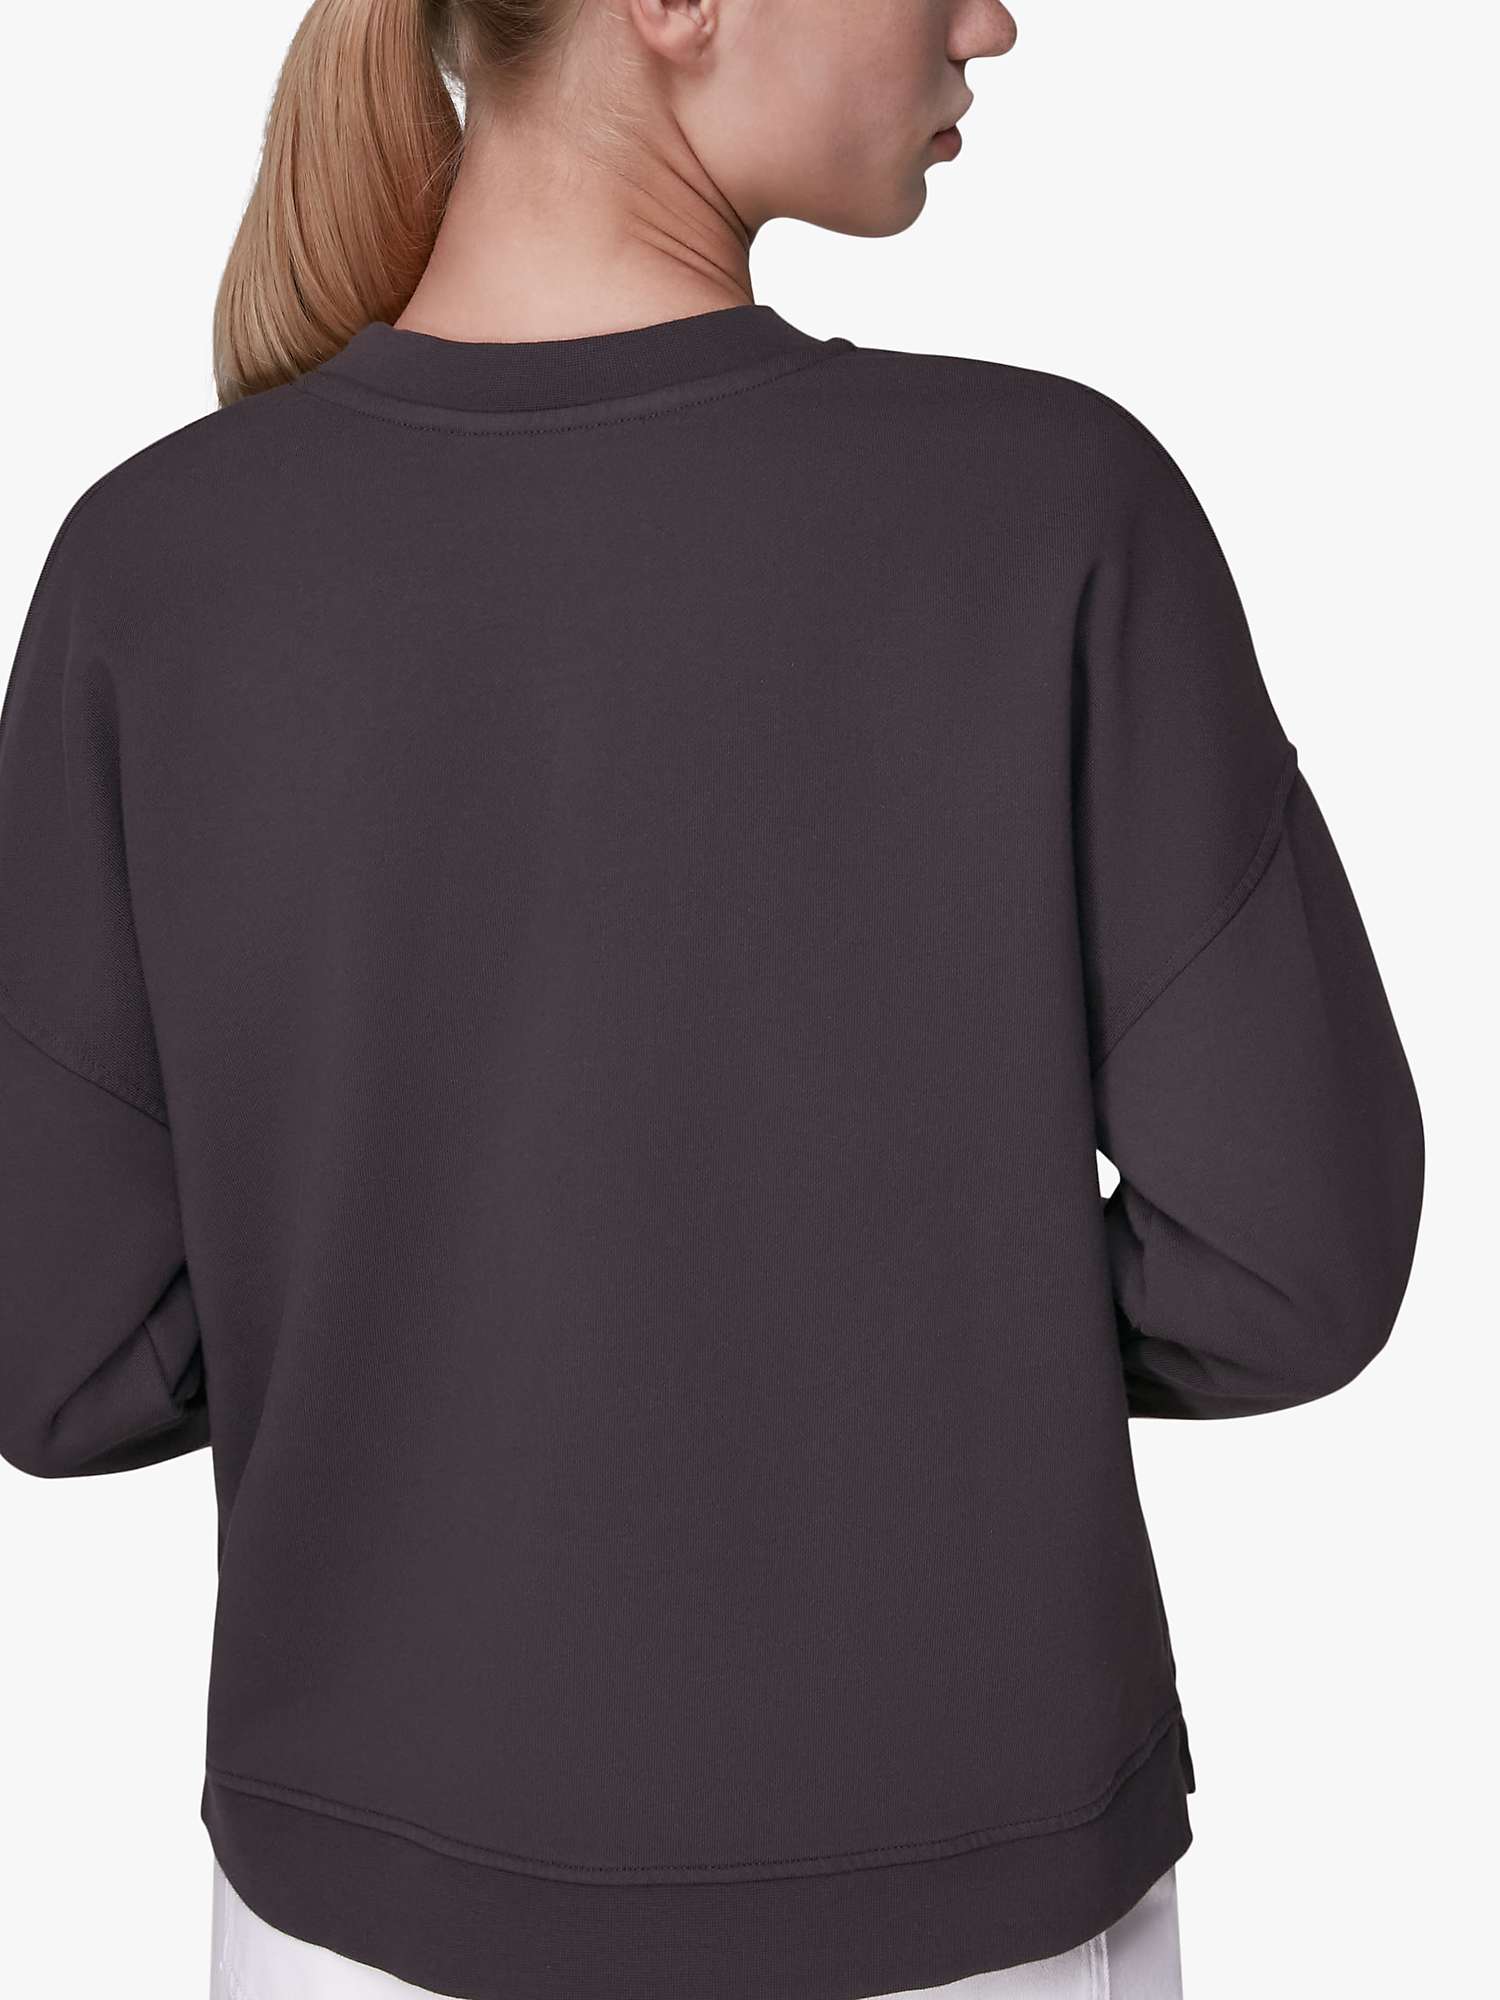 Buy Whistles Boyfriend Fit Patch Pocket Sweatshirt, Grey Online at johnlewis.com